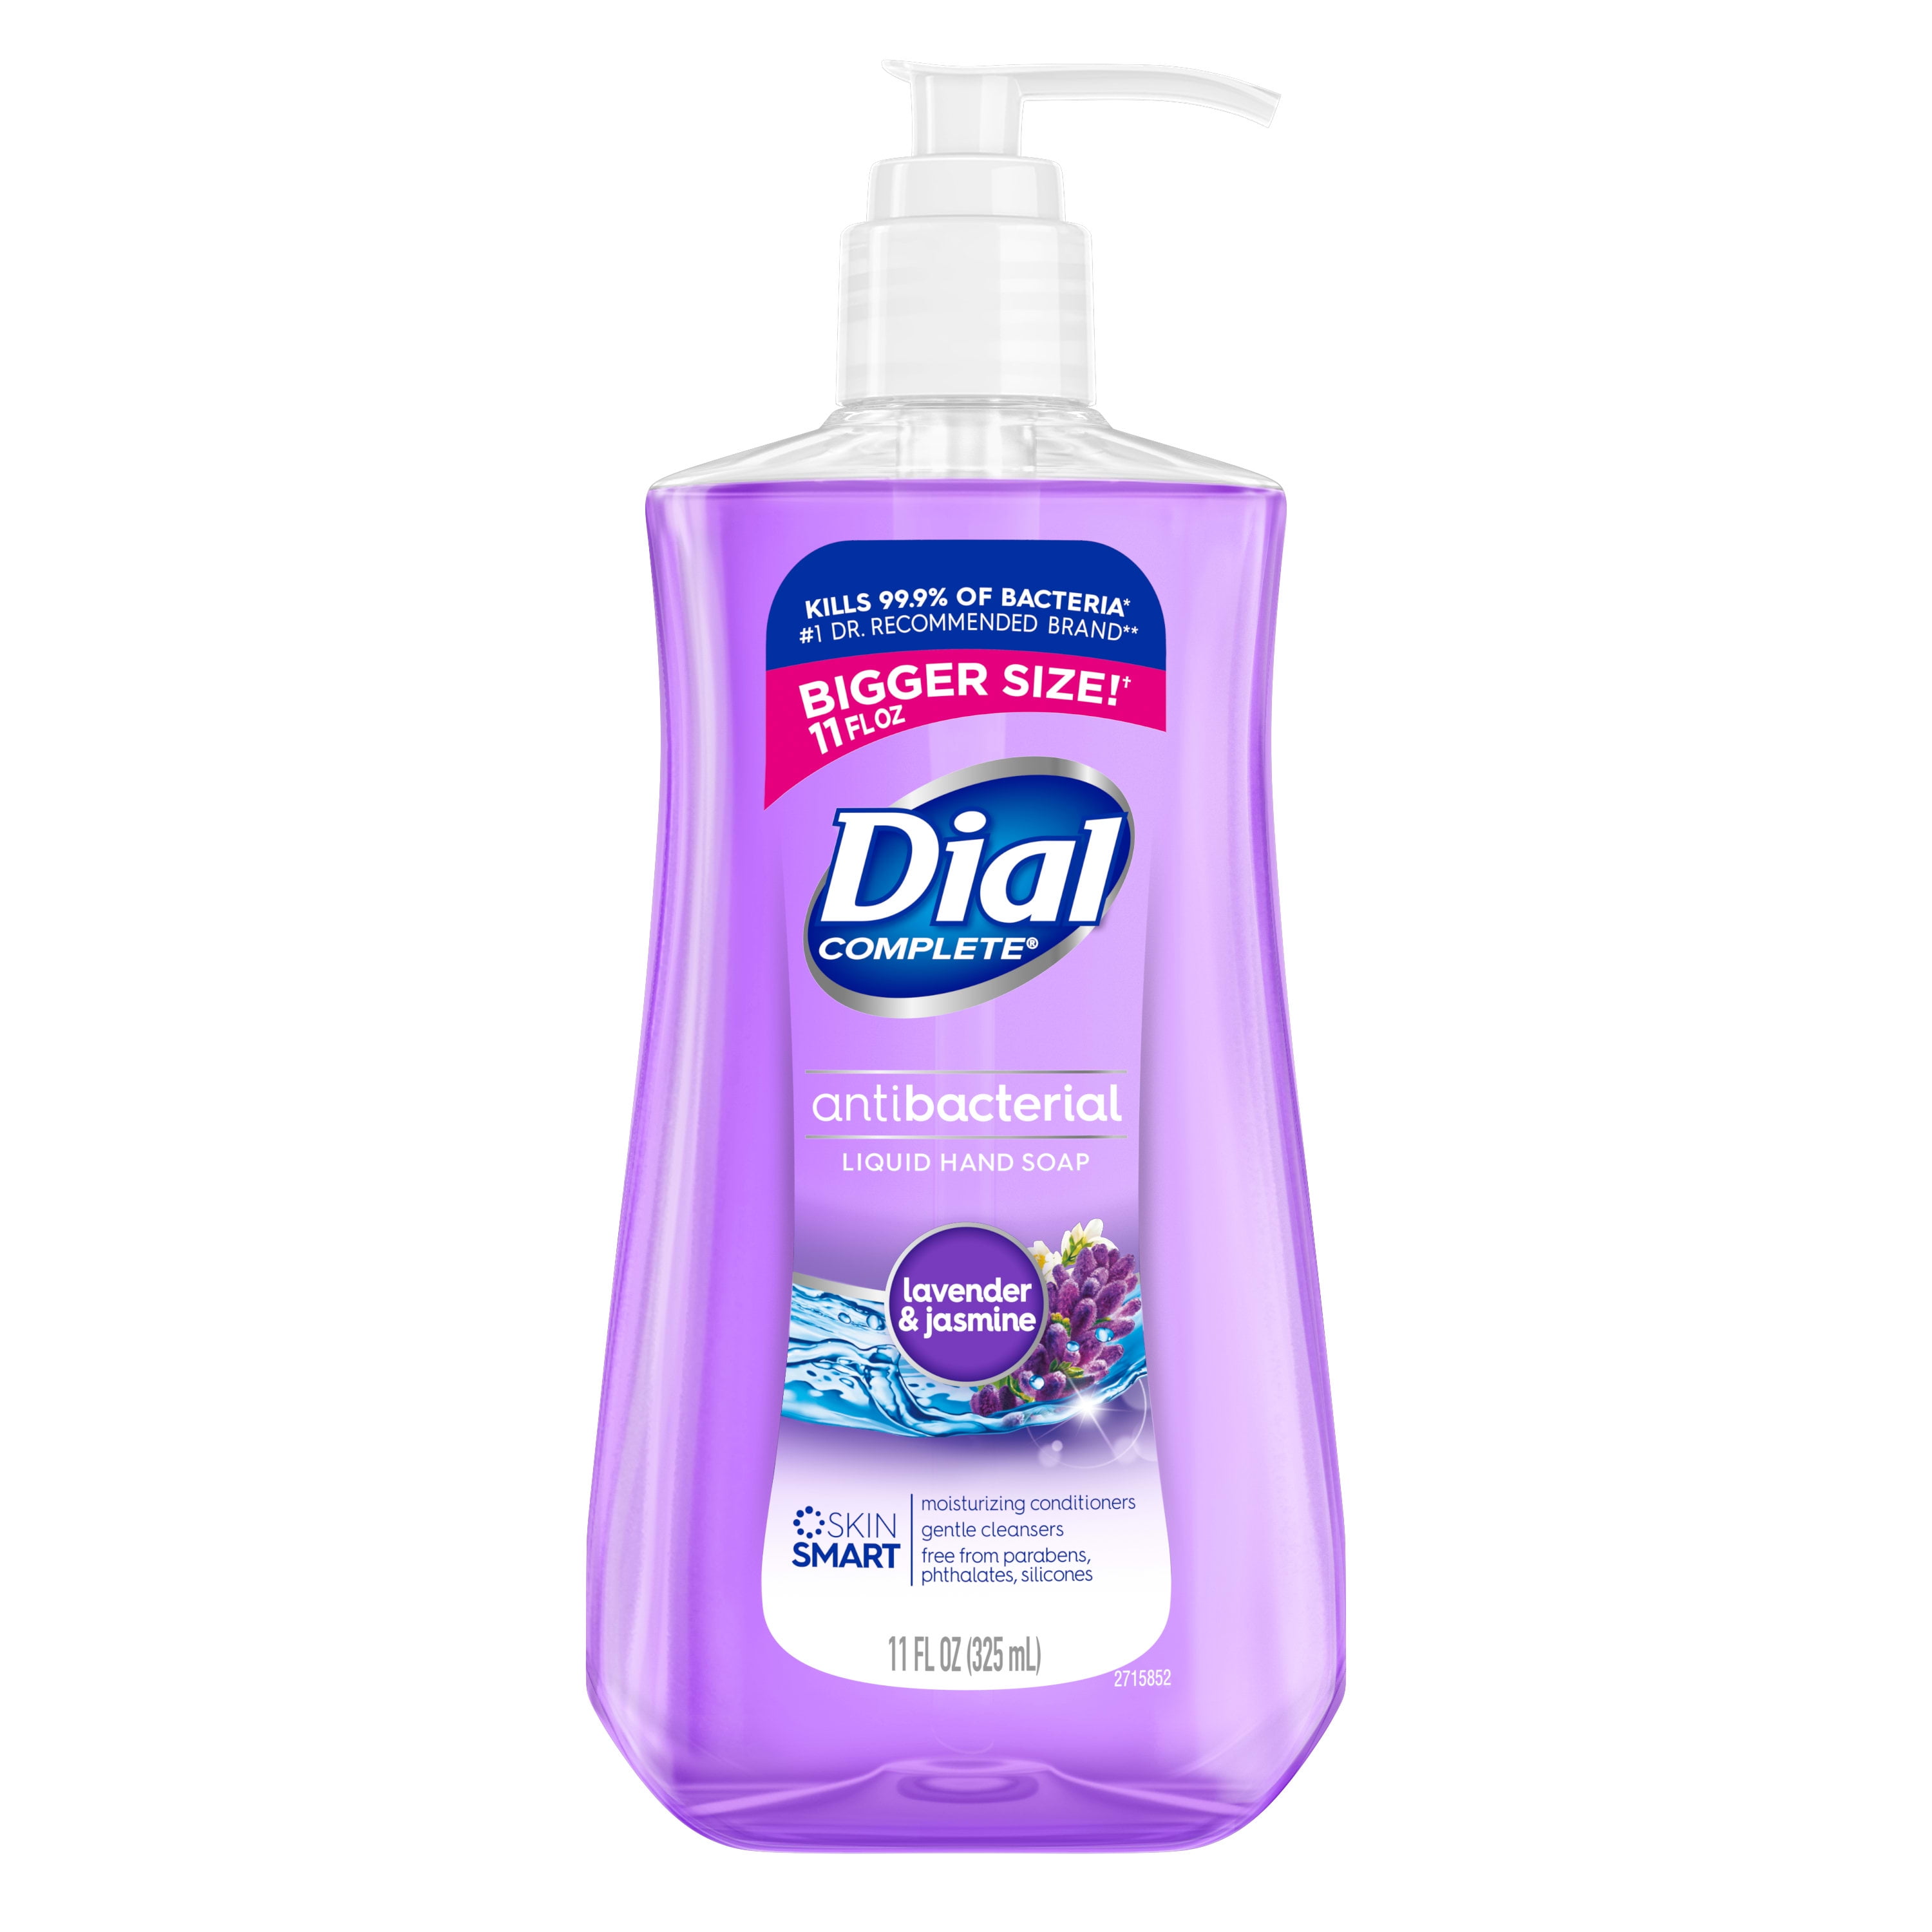 Dial Complete Antibacterial Liquid Hand Soap, Lavender & Jasmine Scent, 11 fl oz